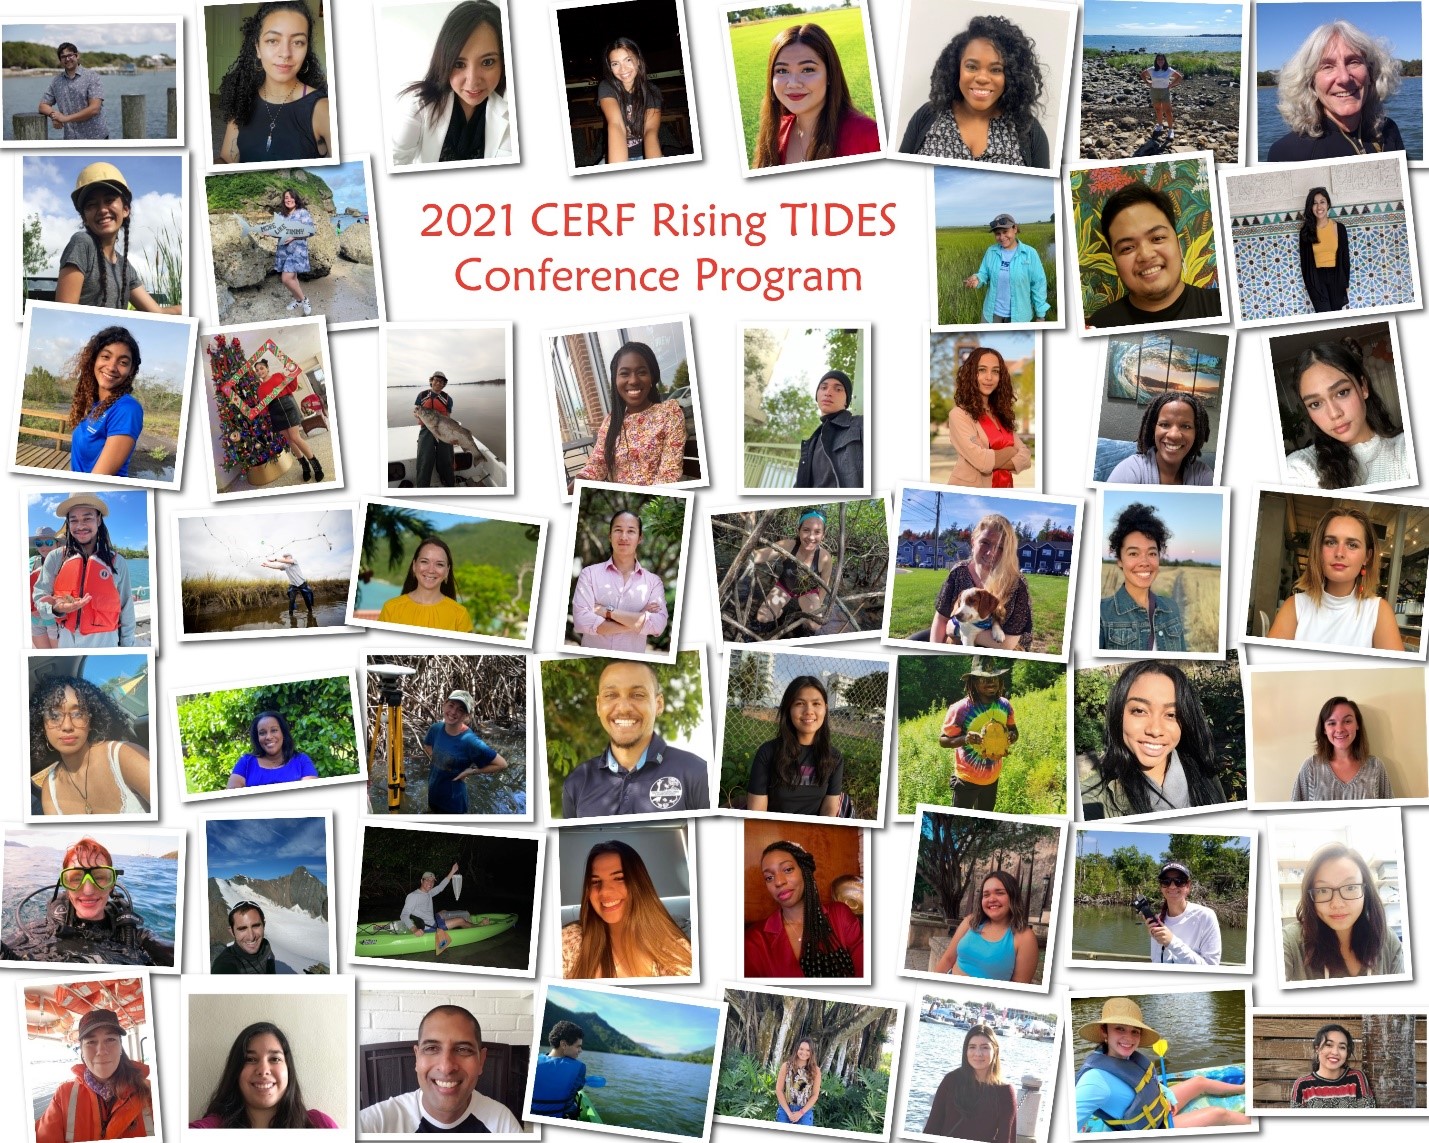 2021 CERF Rising TIDES Conference Program Photo Compilation